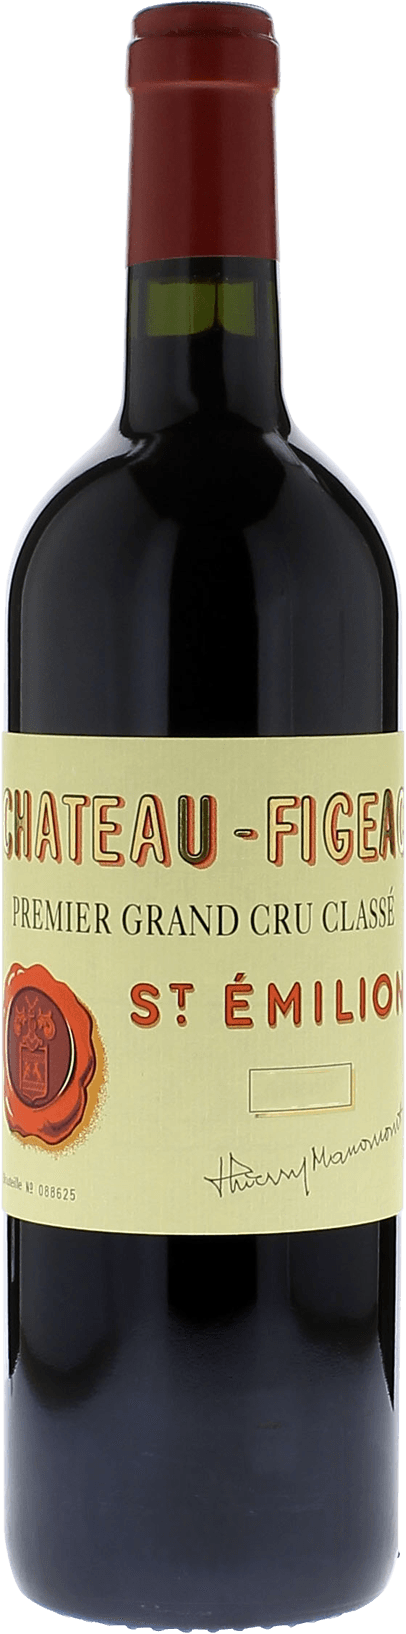 Figeac 1989 1er Grand cru B class Saint-Emilion, Bordeaux rouge